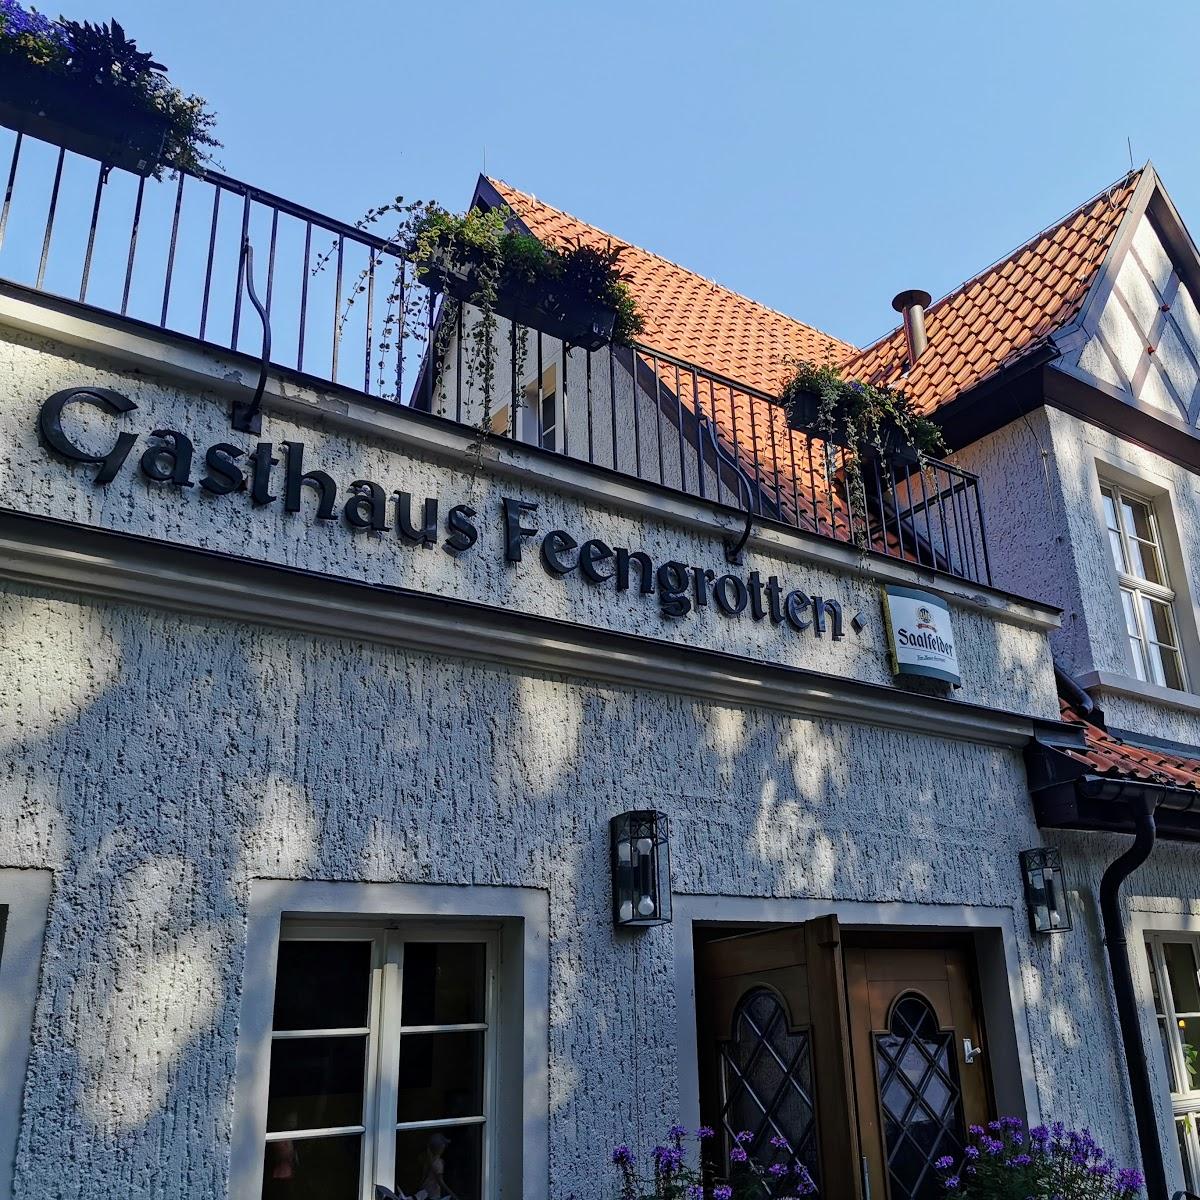 Restaurant "Gasthaus Feengrotten" in Saalfeld-Saale